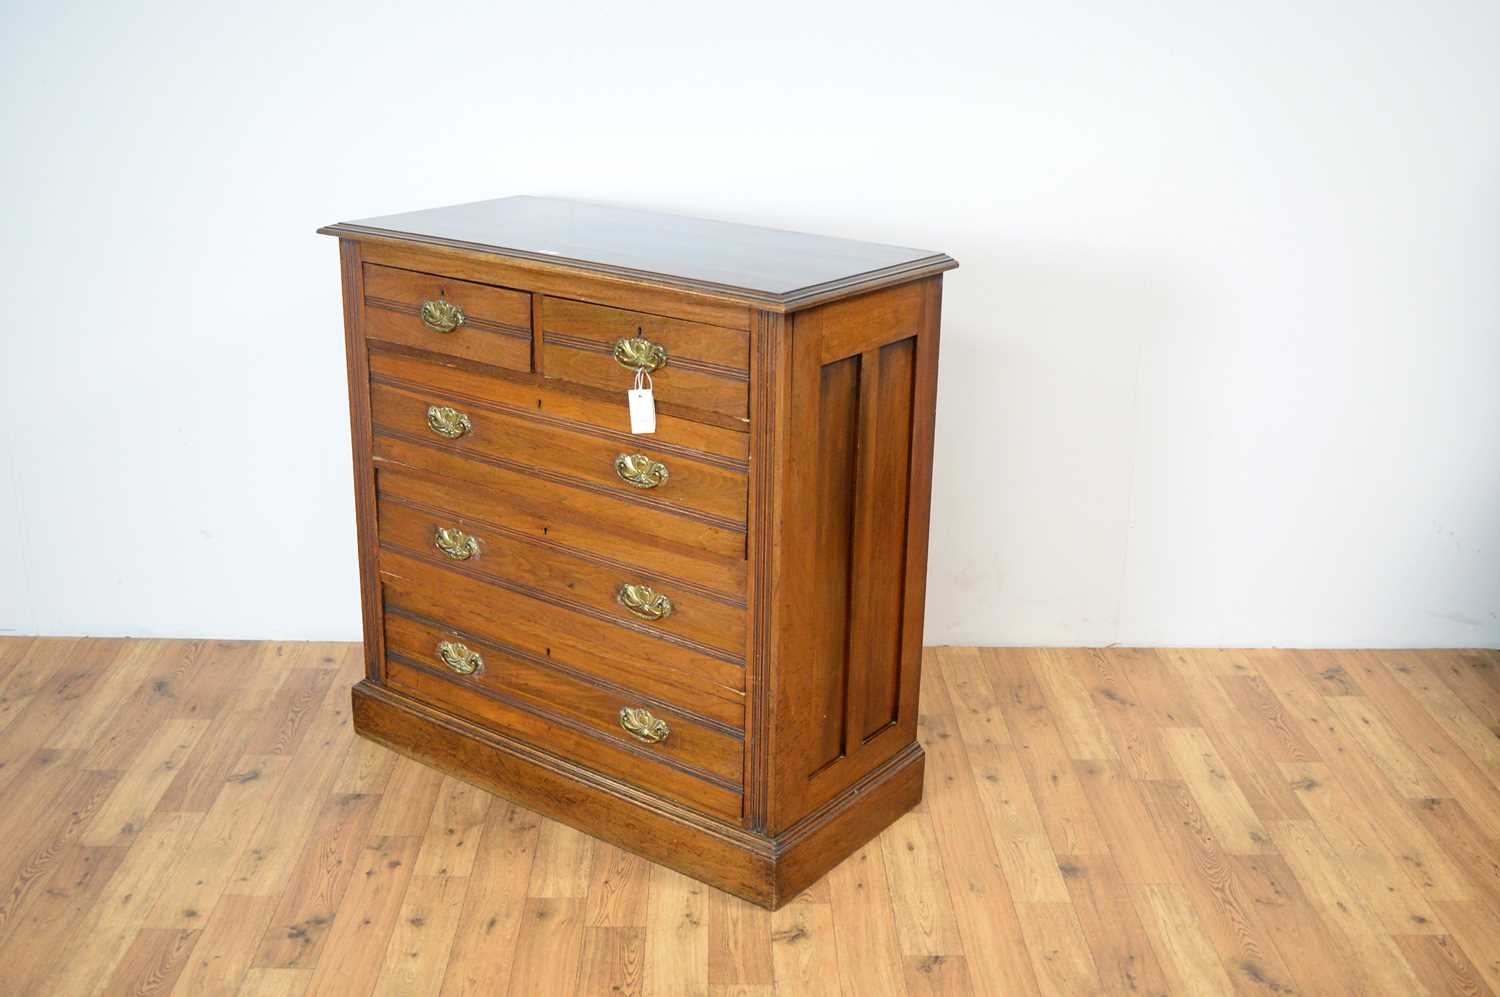 An Edwardian walnut chest of drawers